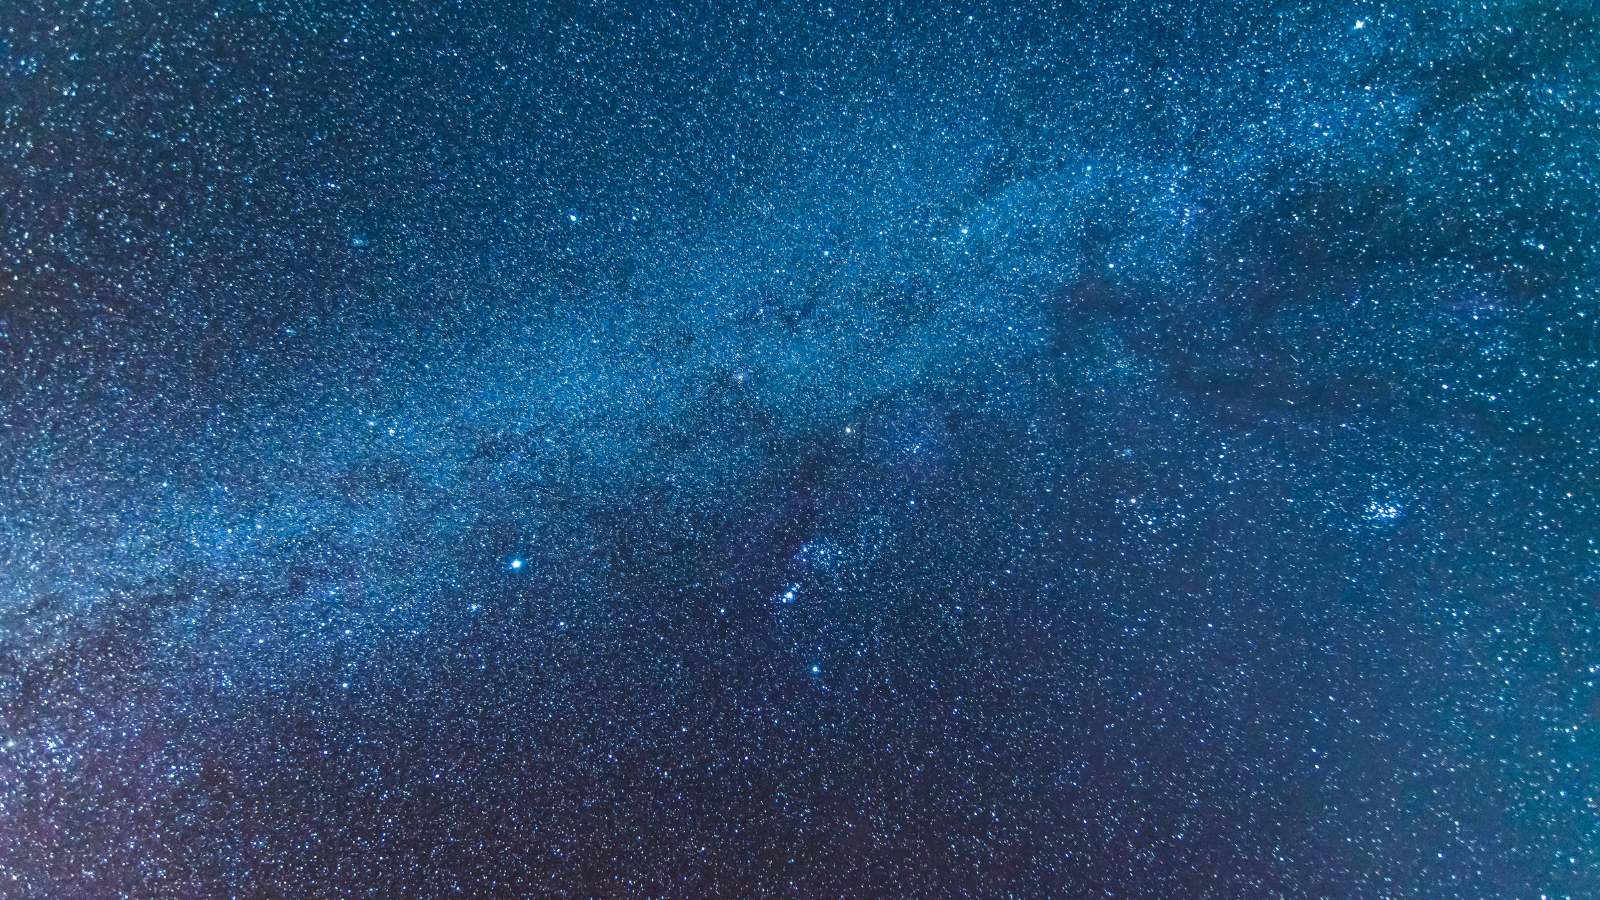 Professor Raman Prinja’s Top 5 Tips for Enjoying the Wonders of the Night Sky